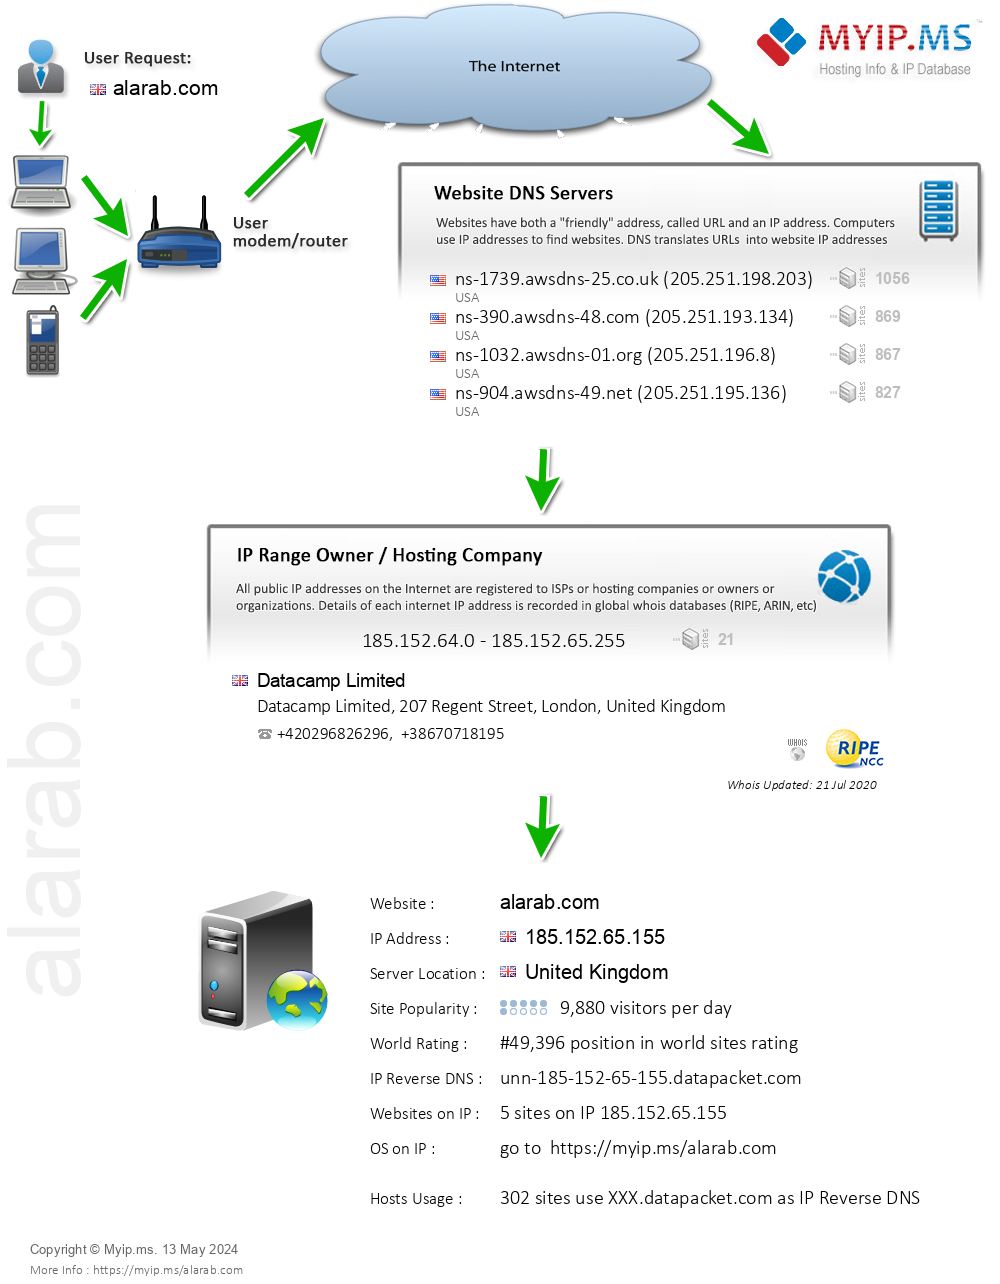 Alarab.com - Website Hosting Visual IP Diagram